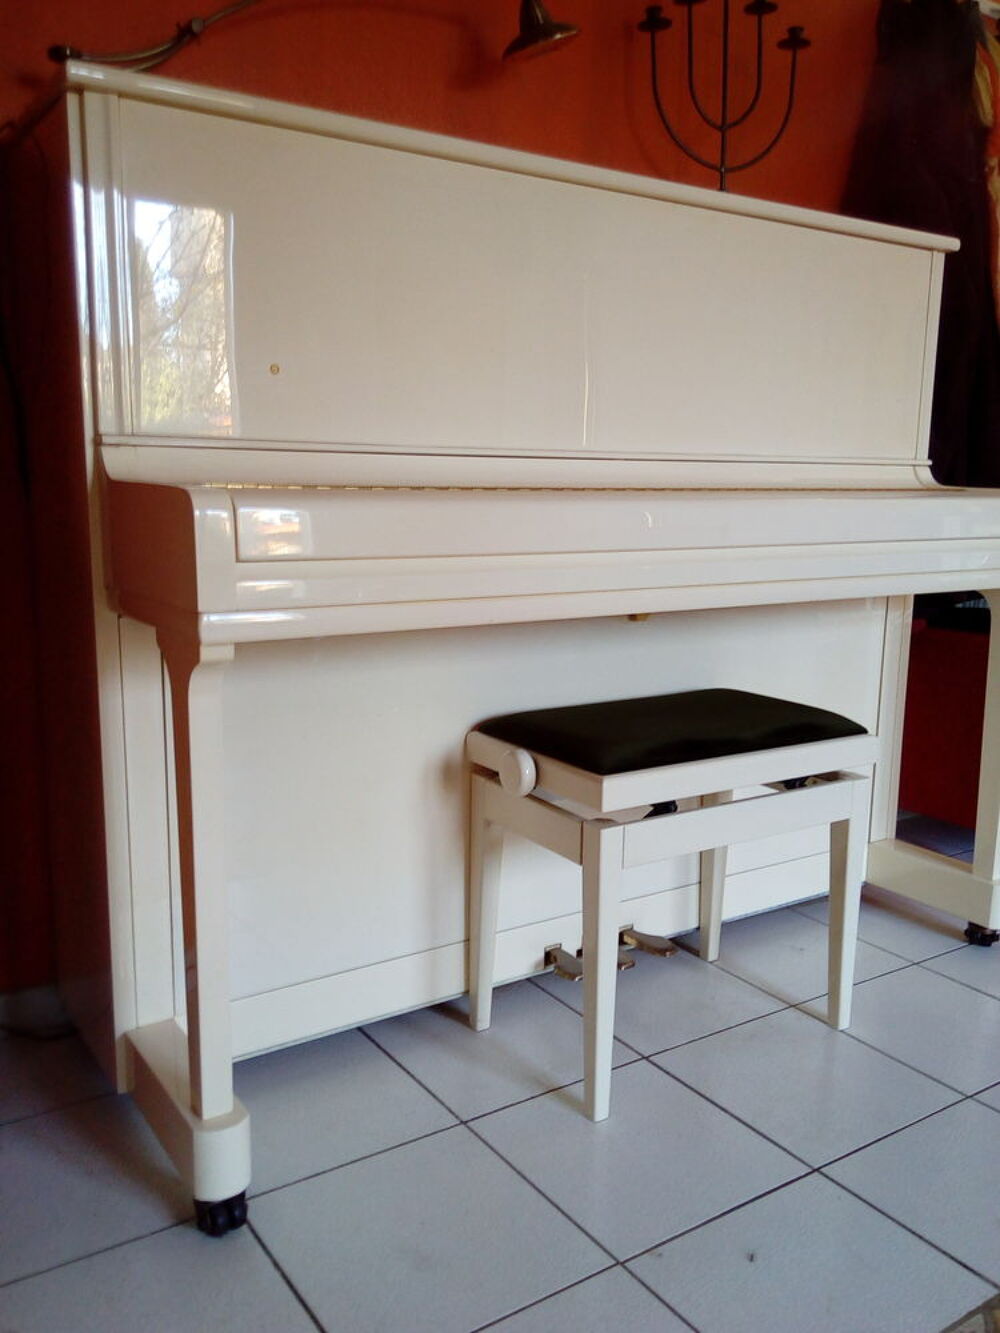 piano Samick Instruments de musique